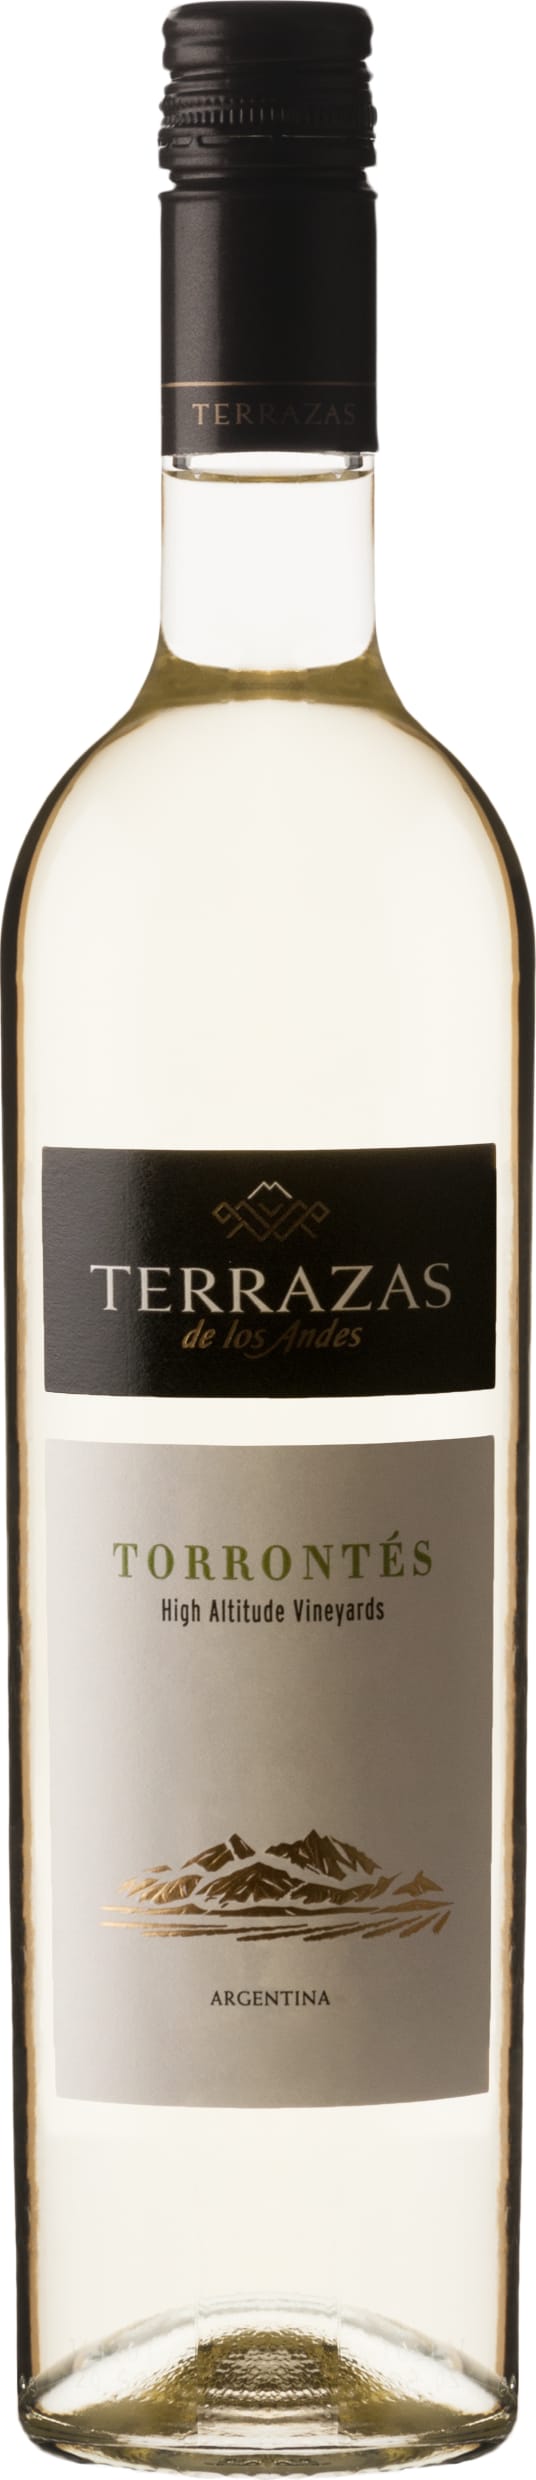 Terrazas Selection Torrontes 2020 75cl - Buy Terrazas Wines from GREAT WINES DIRECT wine shop